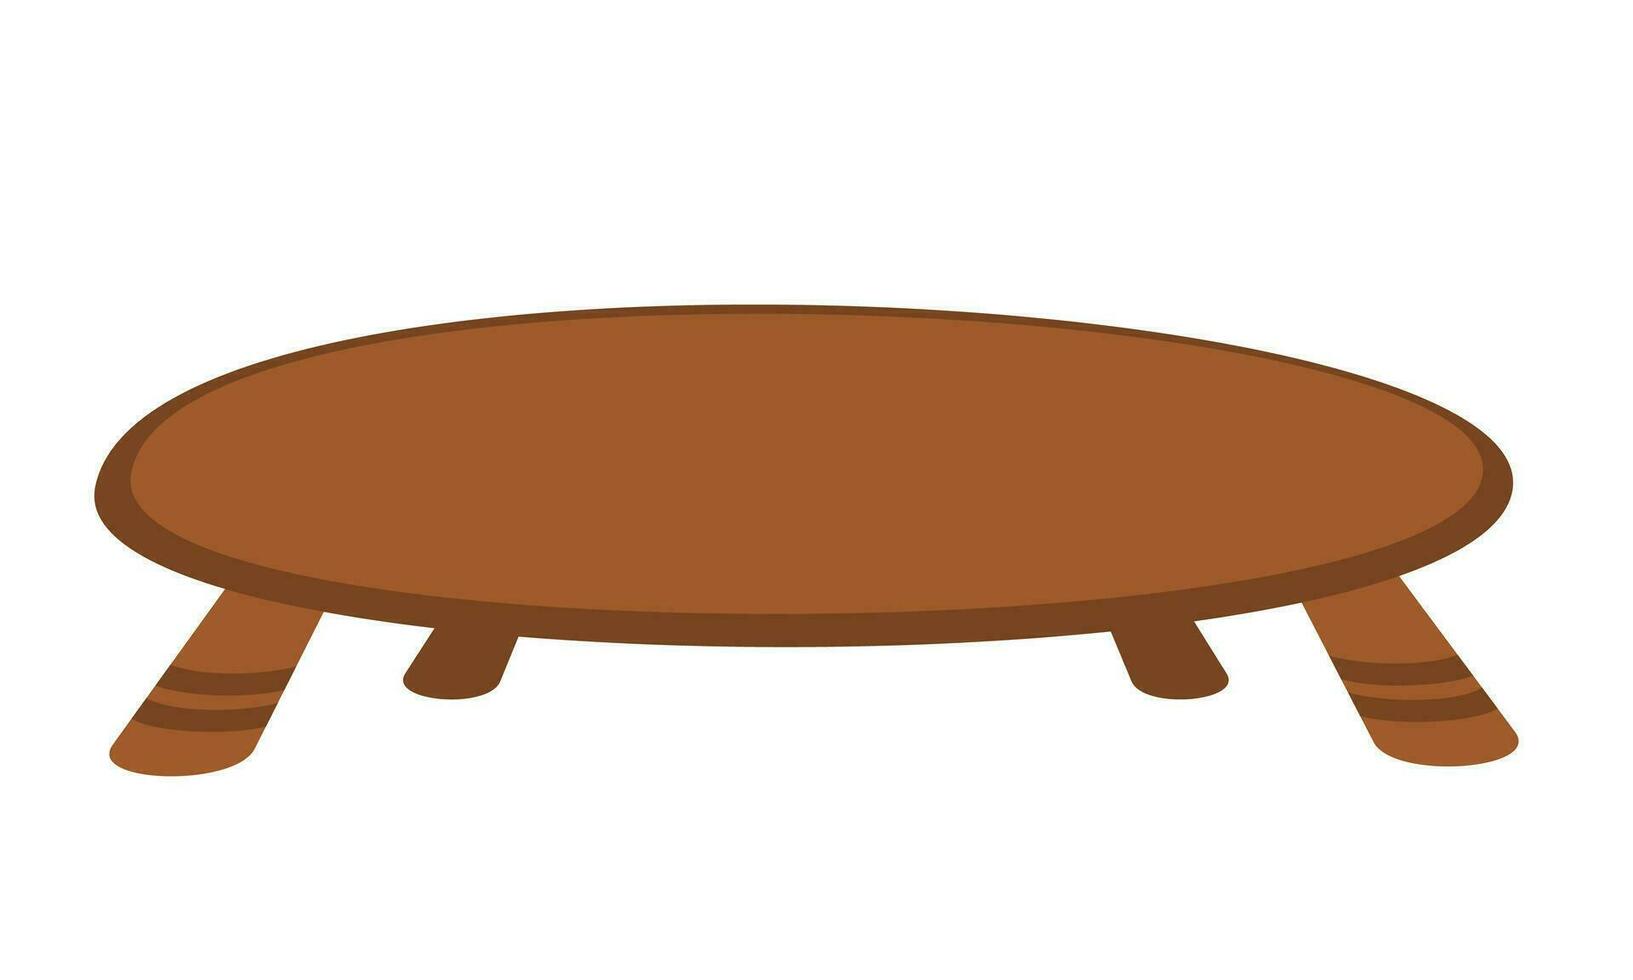 Leisure wooden table furniture illustration vector design